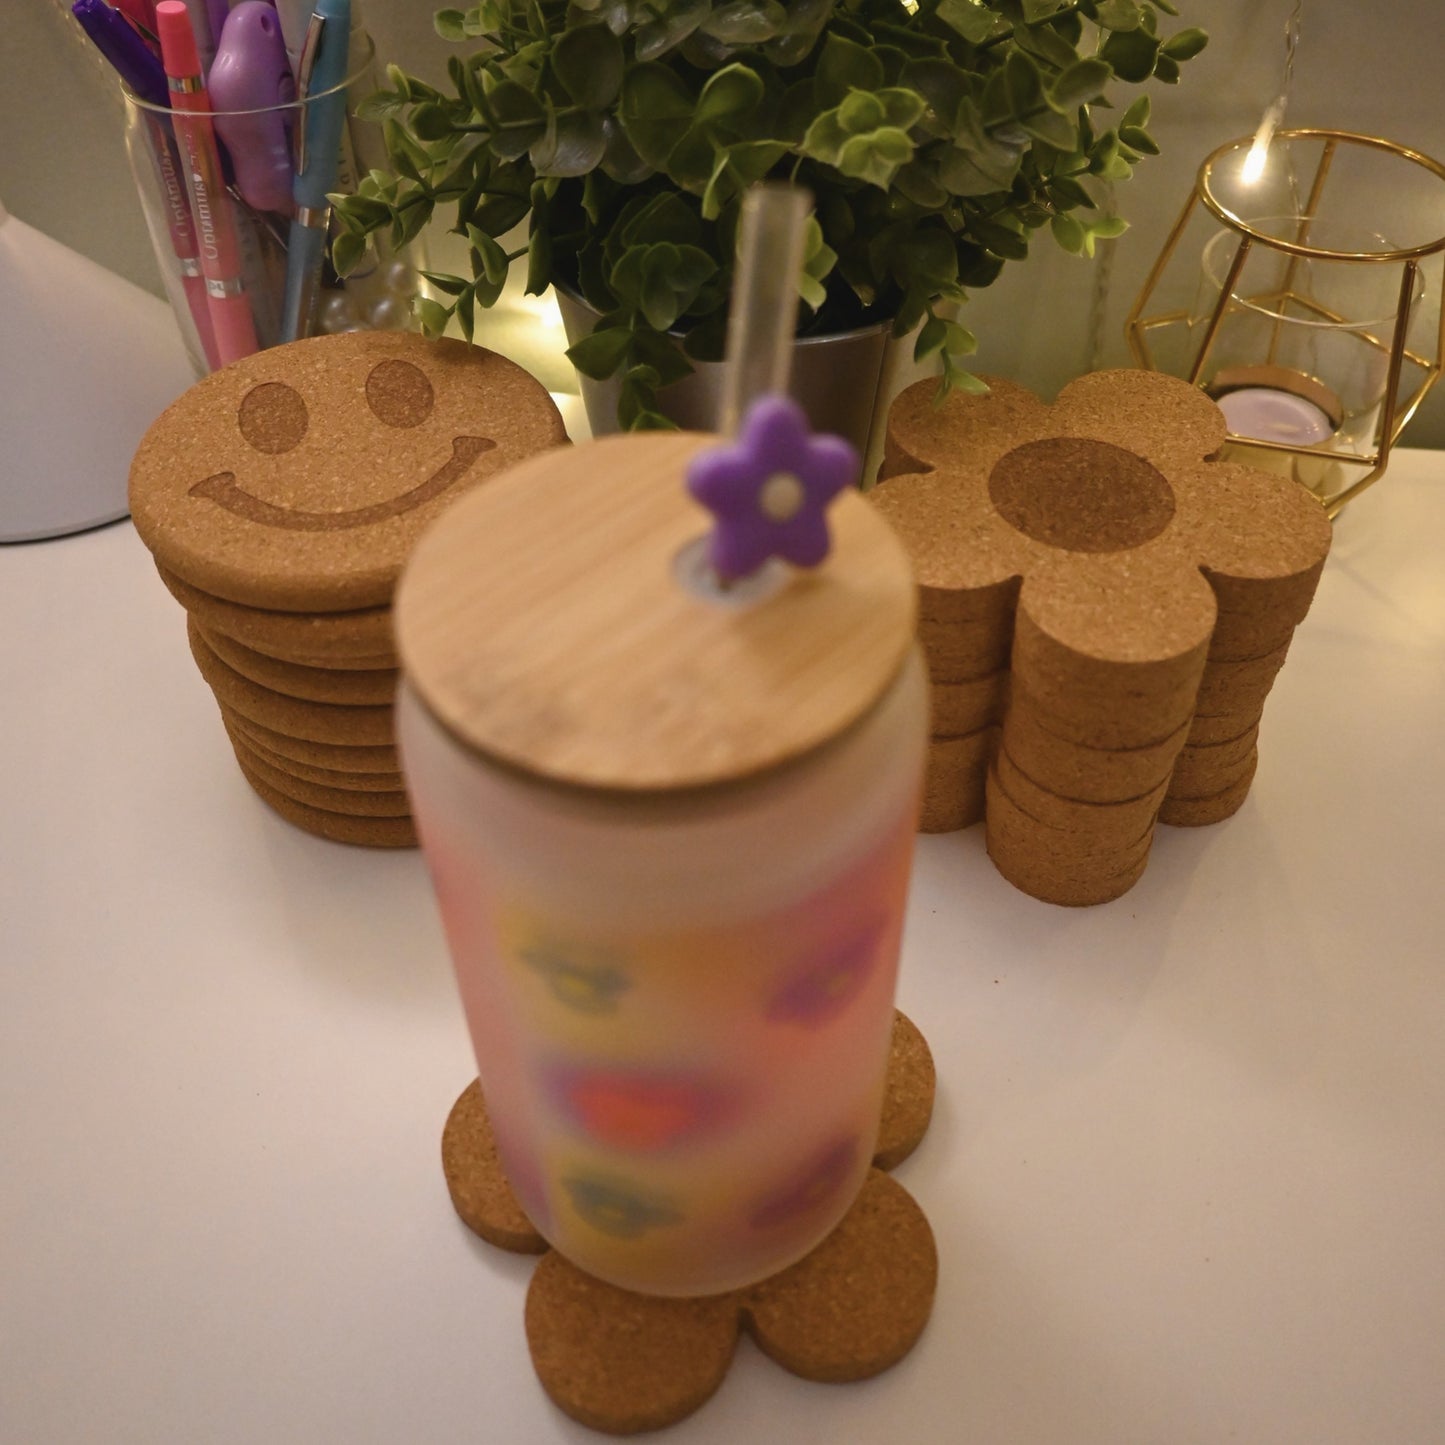 Cork Drink Coasters - Smiley Face Coaster, Flower Coaster